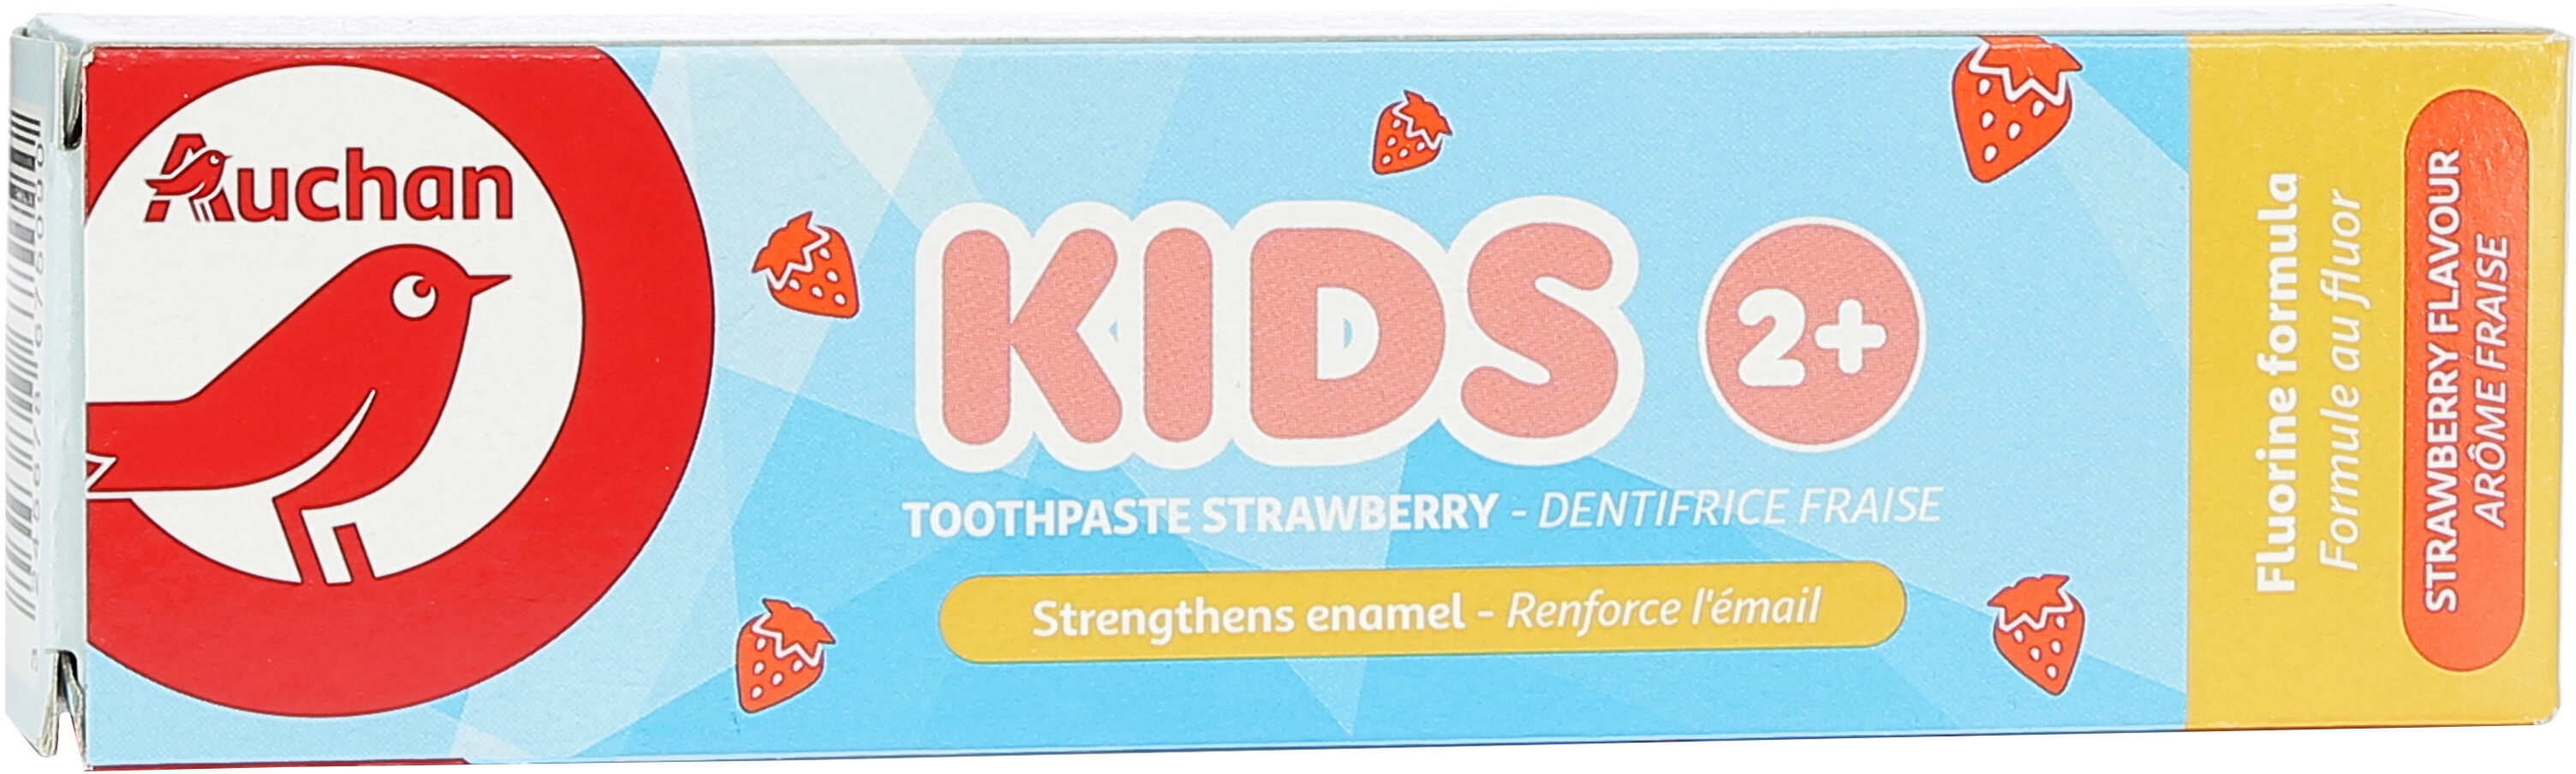 Auchan kids dentifrice - fraise - enfants 2 + - 50ml - Produit - fr